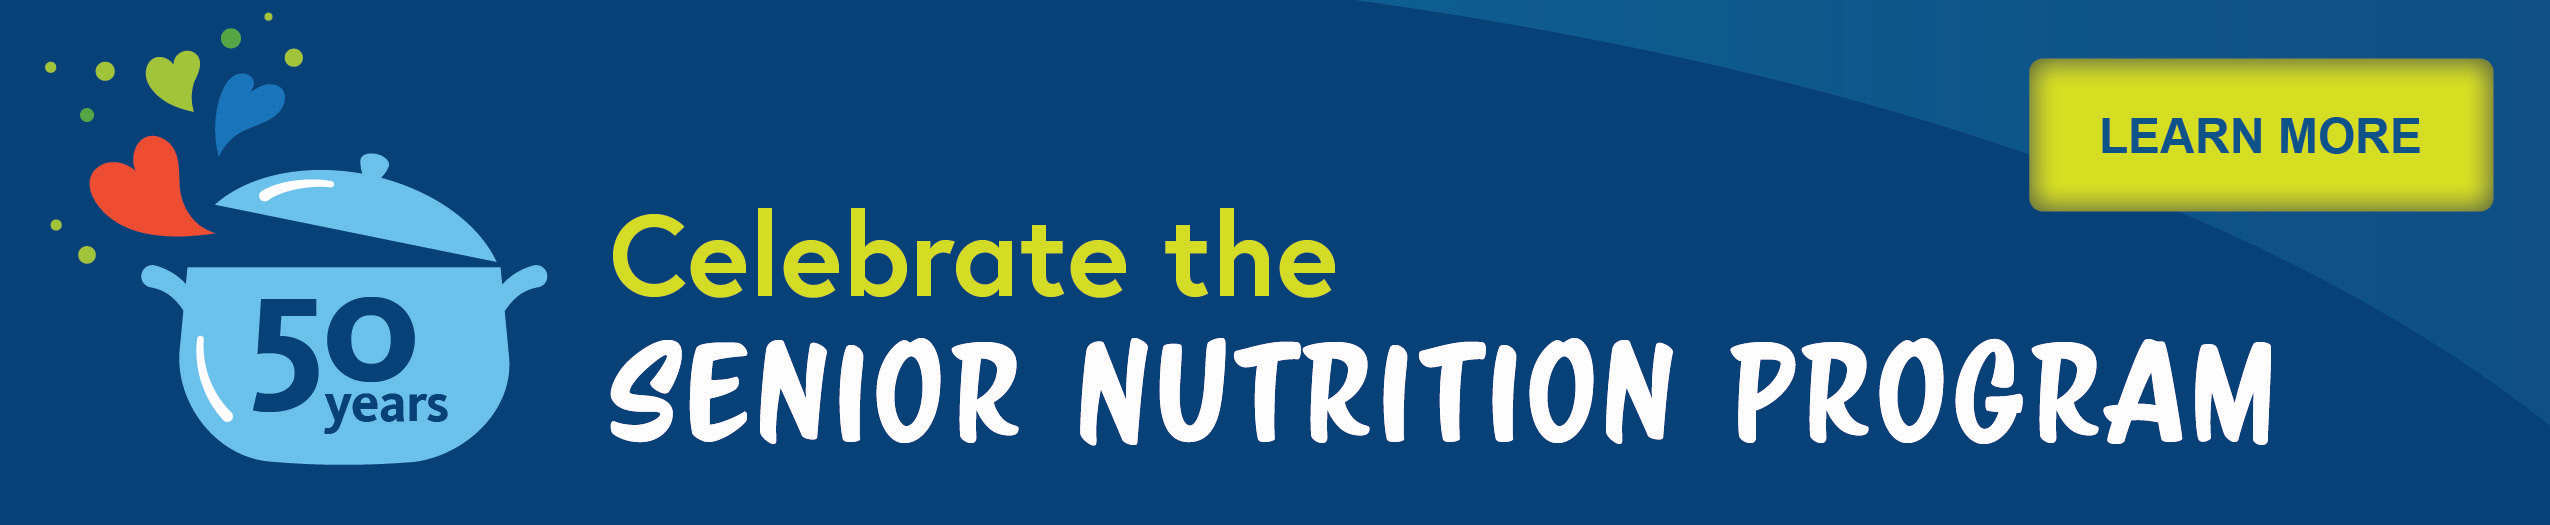 Celebrate the Senior Nutrition Program. Click to learn more.